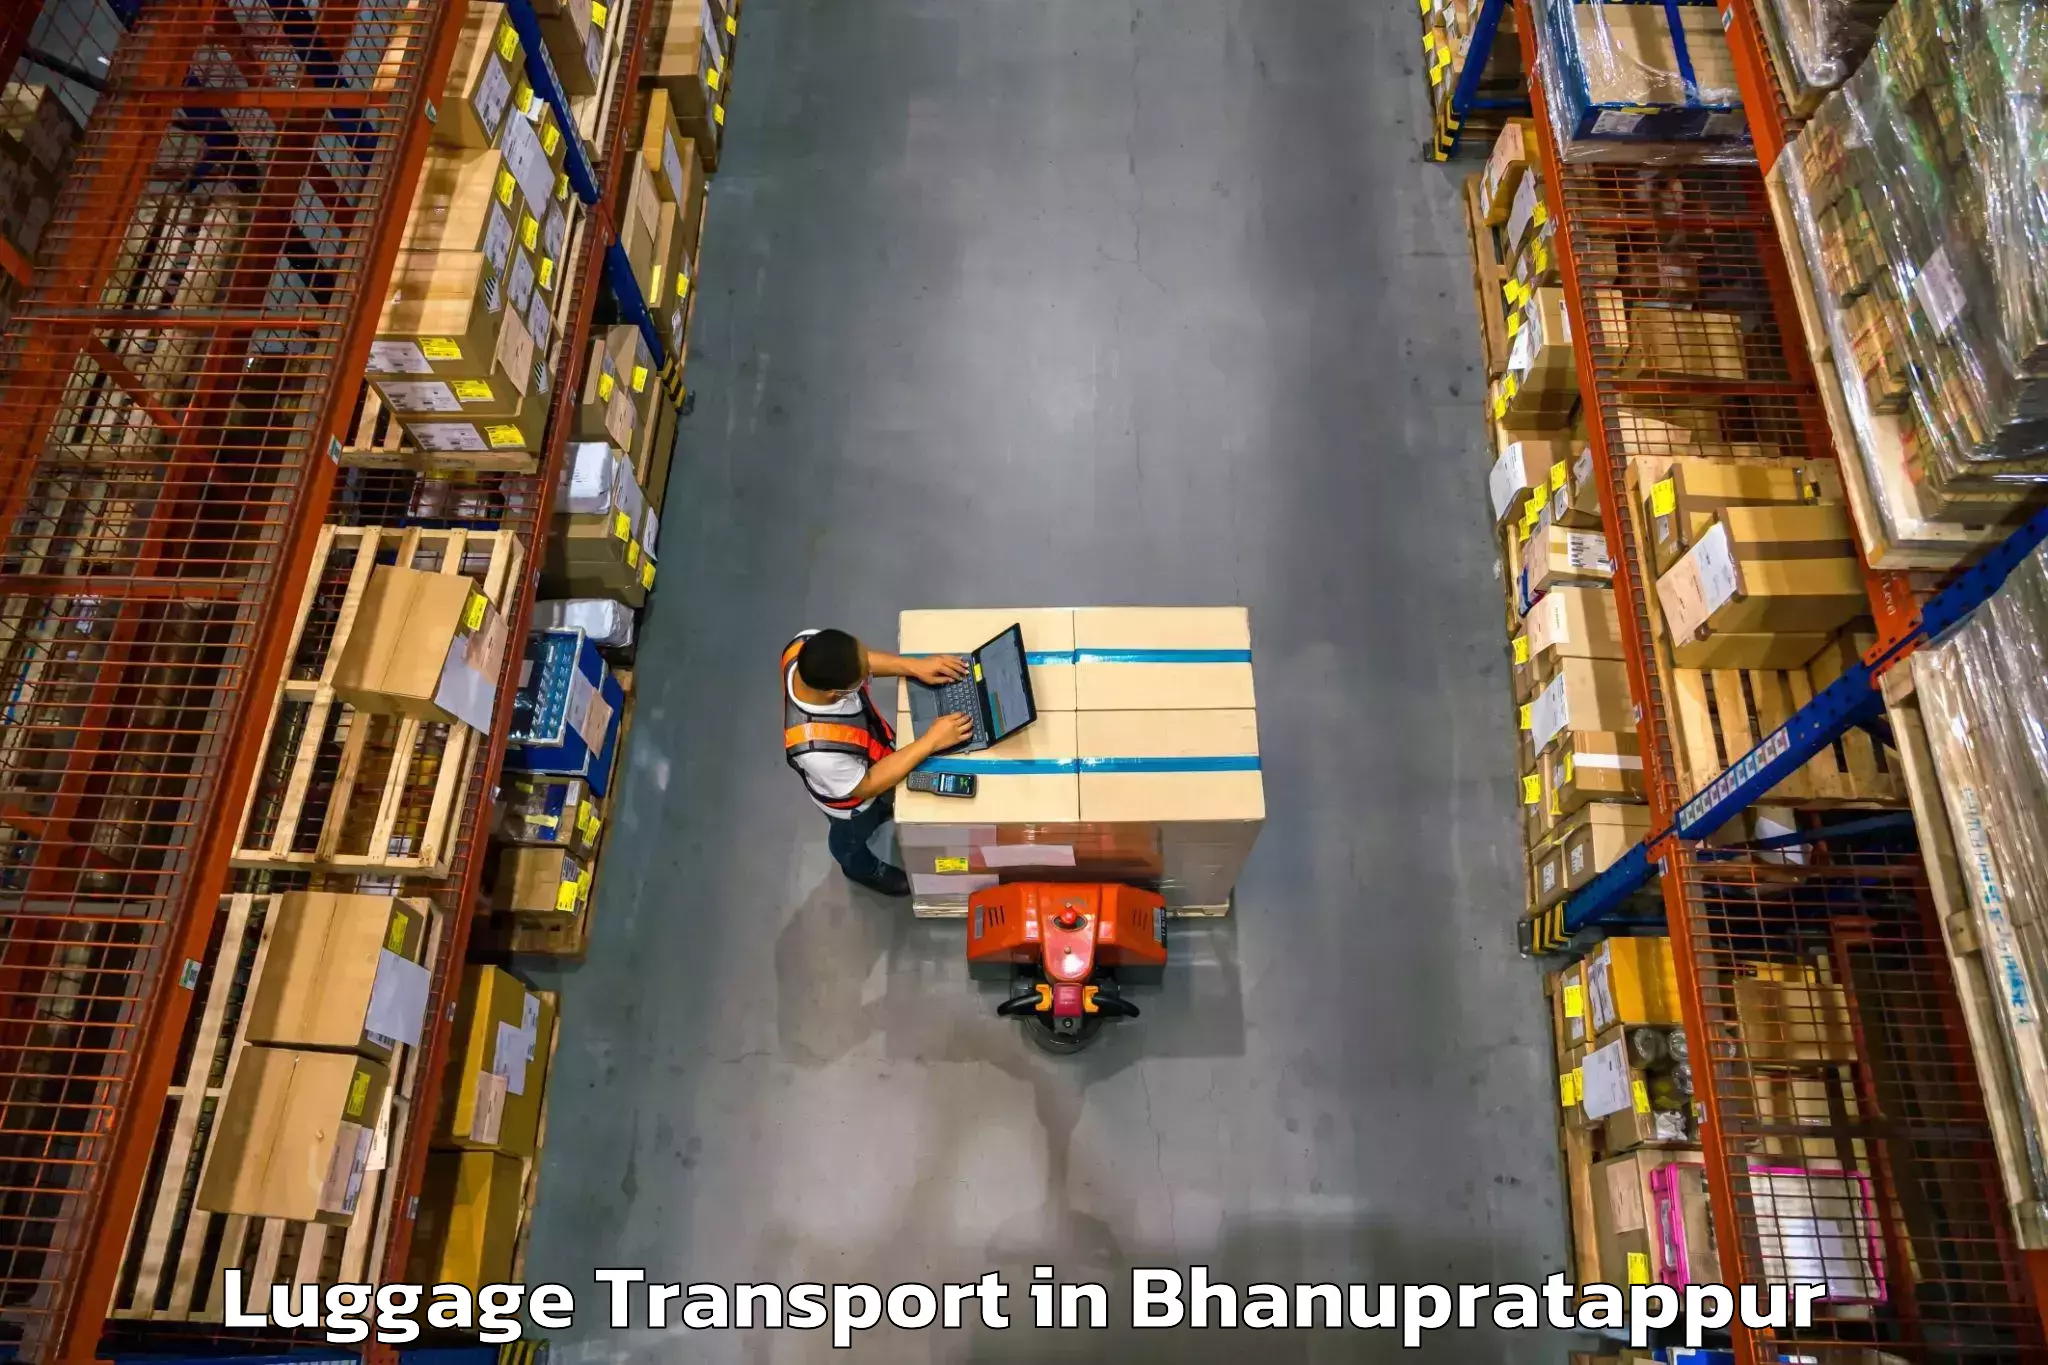 Luggage shipment processing in Bhanupratappur